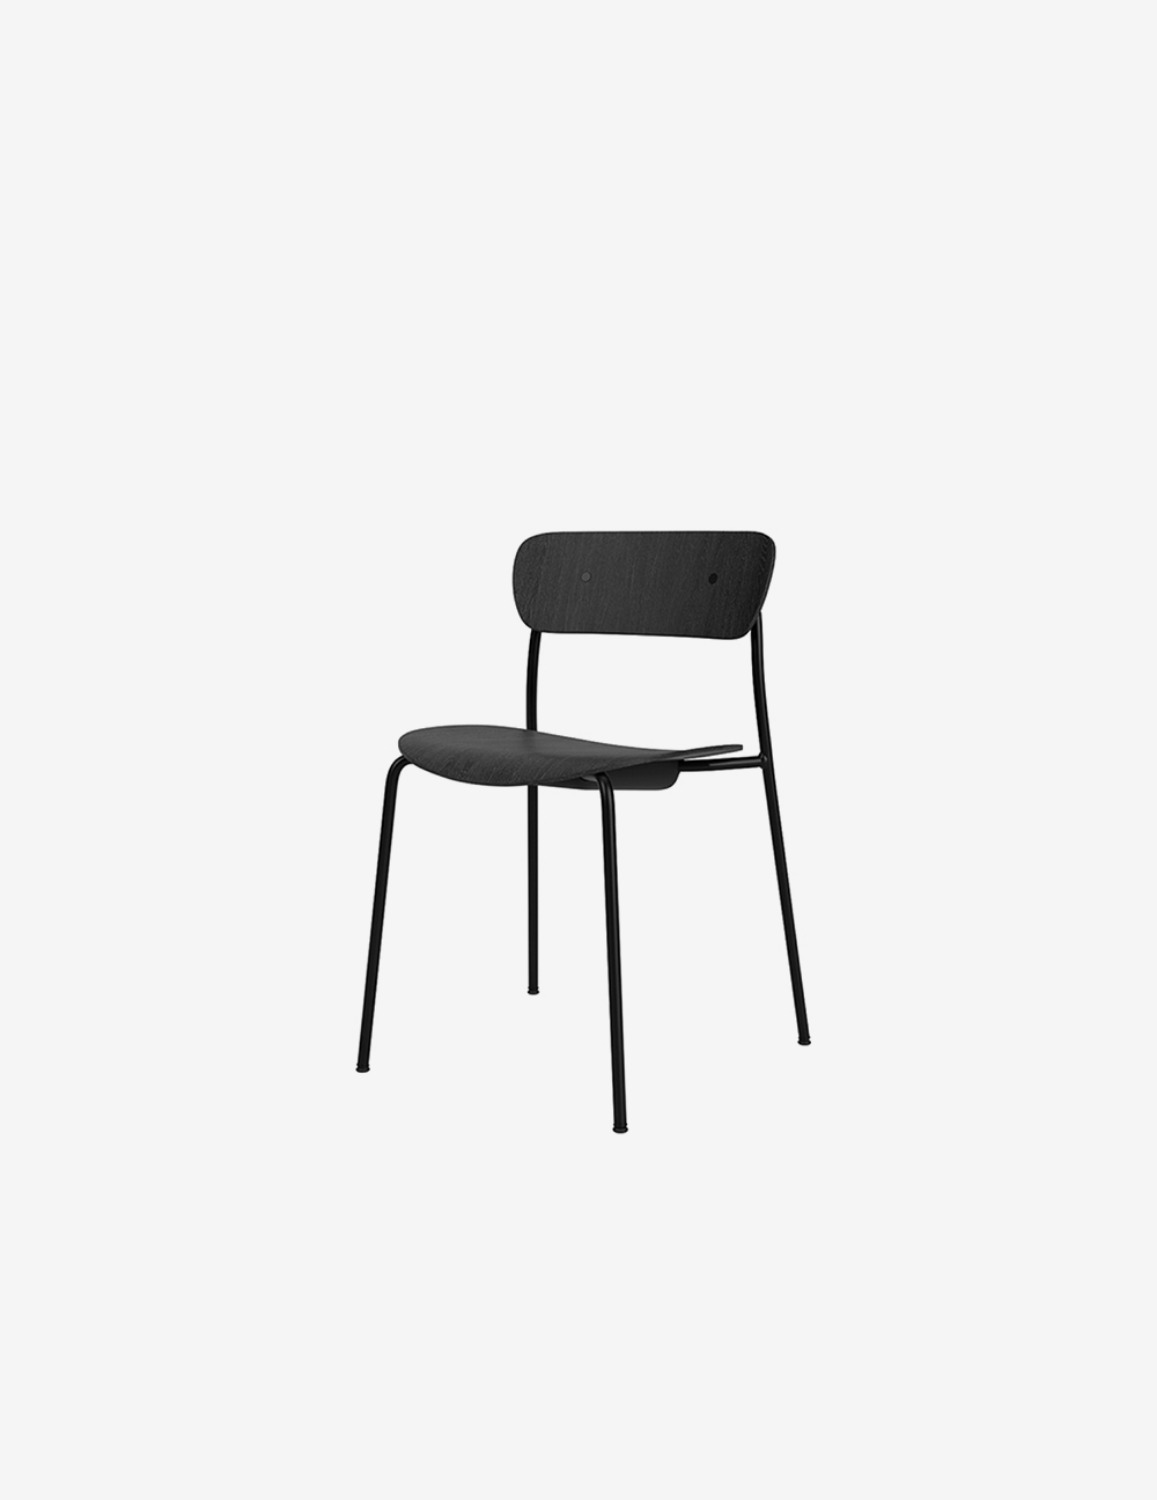 [Andtradition] Pavilion chair / AV1 (Black / Black)